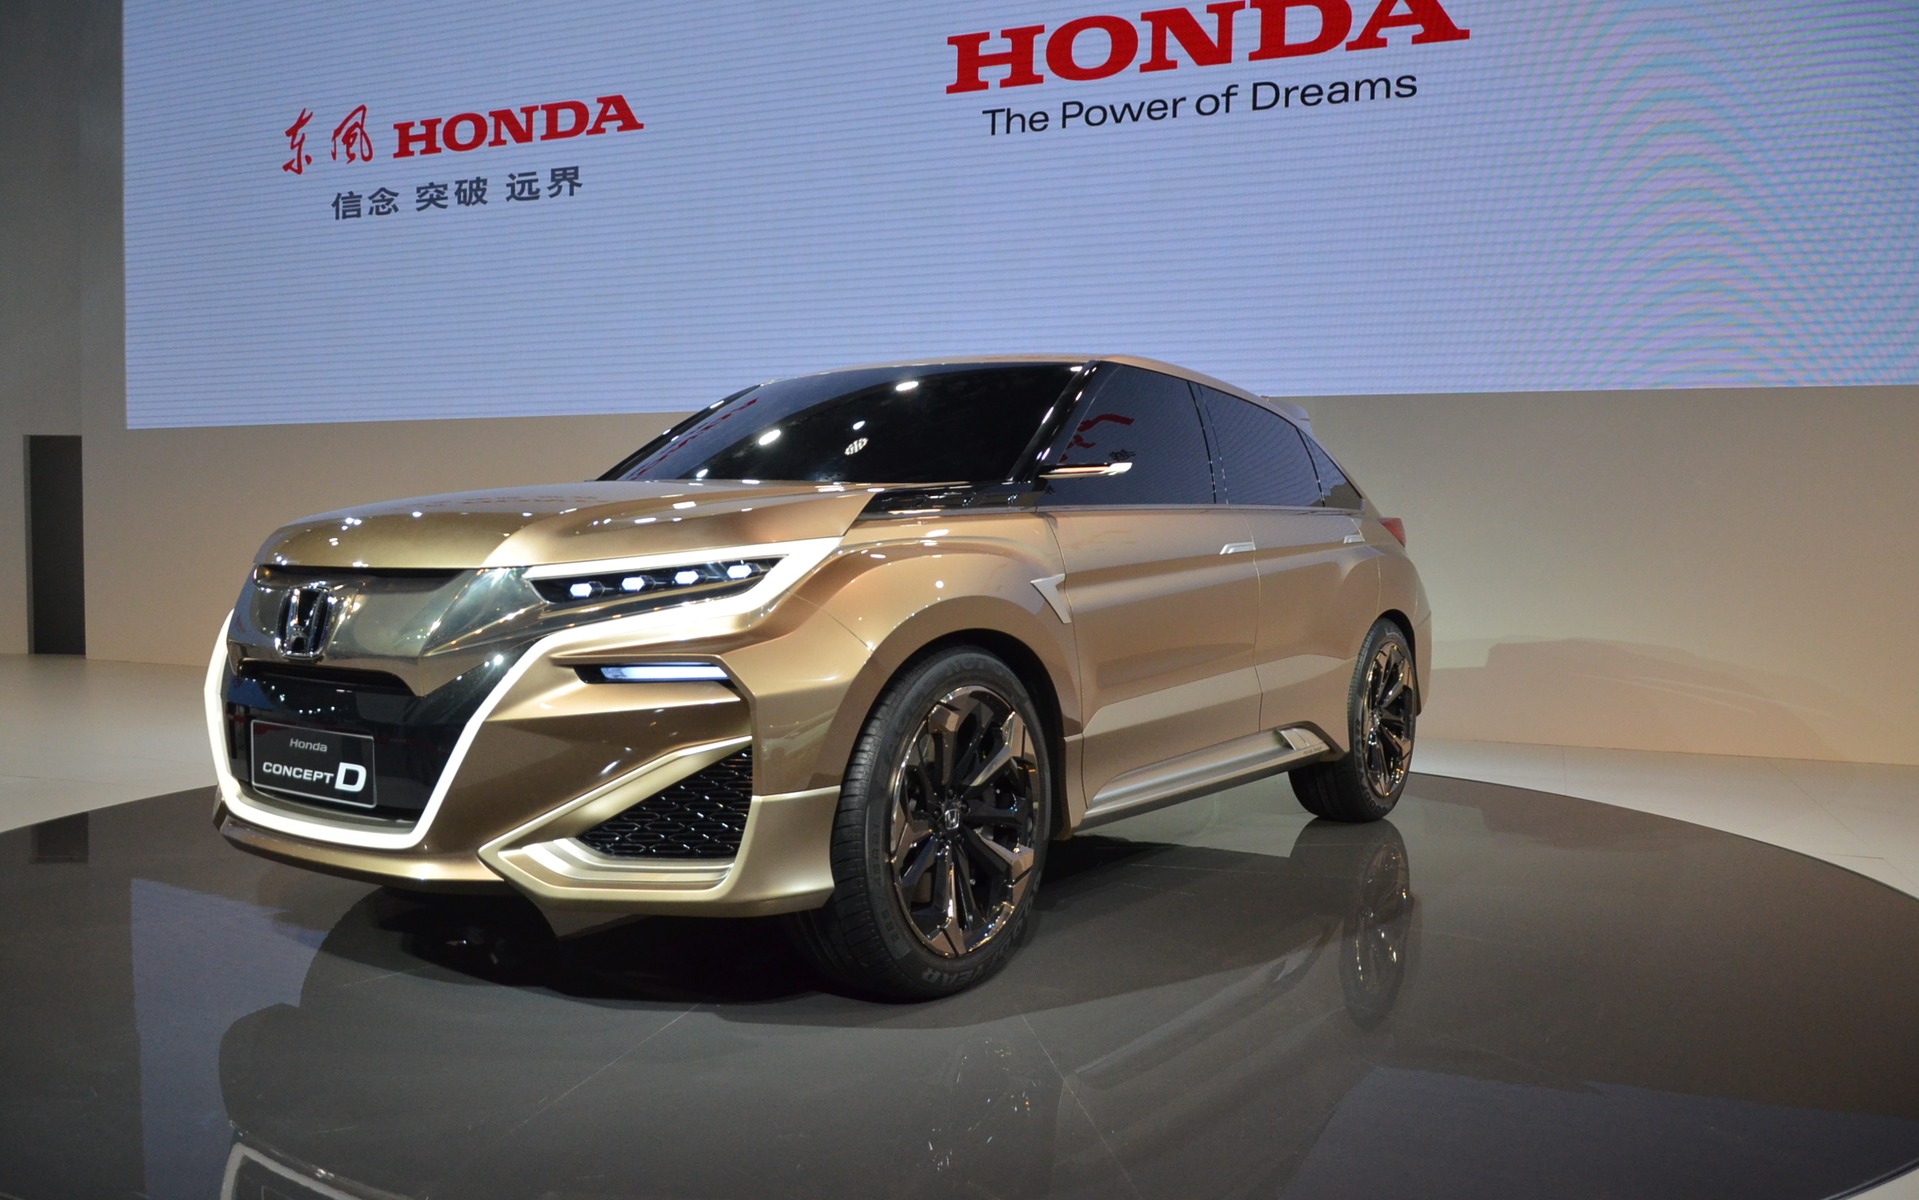 Honda Concept D HD wallpapers, Desktop wallpaper - most viewed